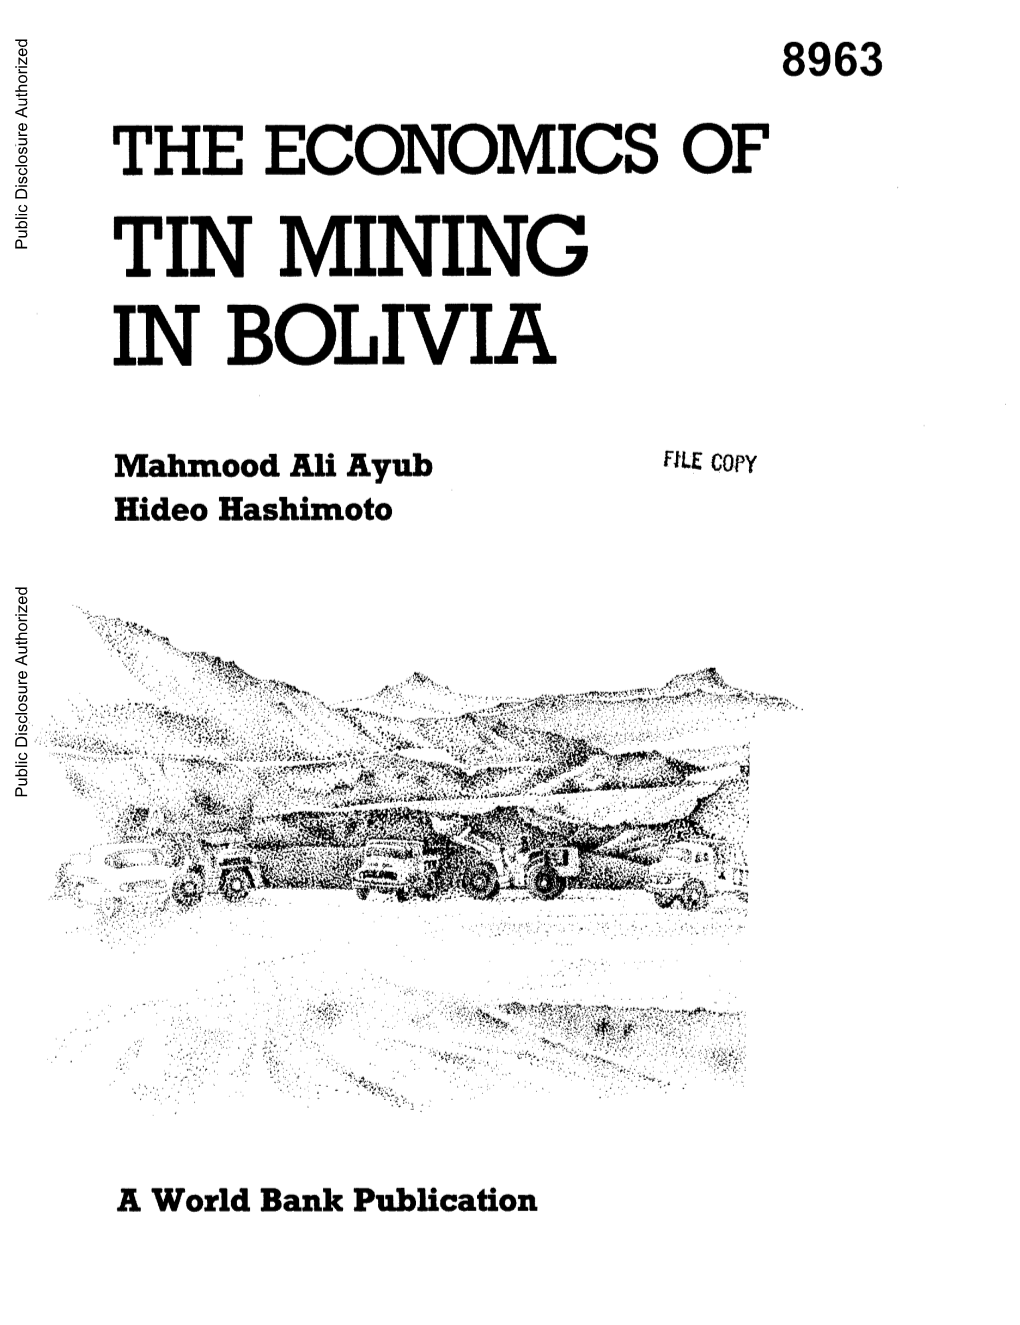 The Economics of Tin Mining in Bolivia